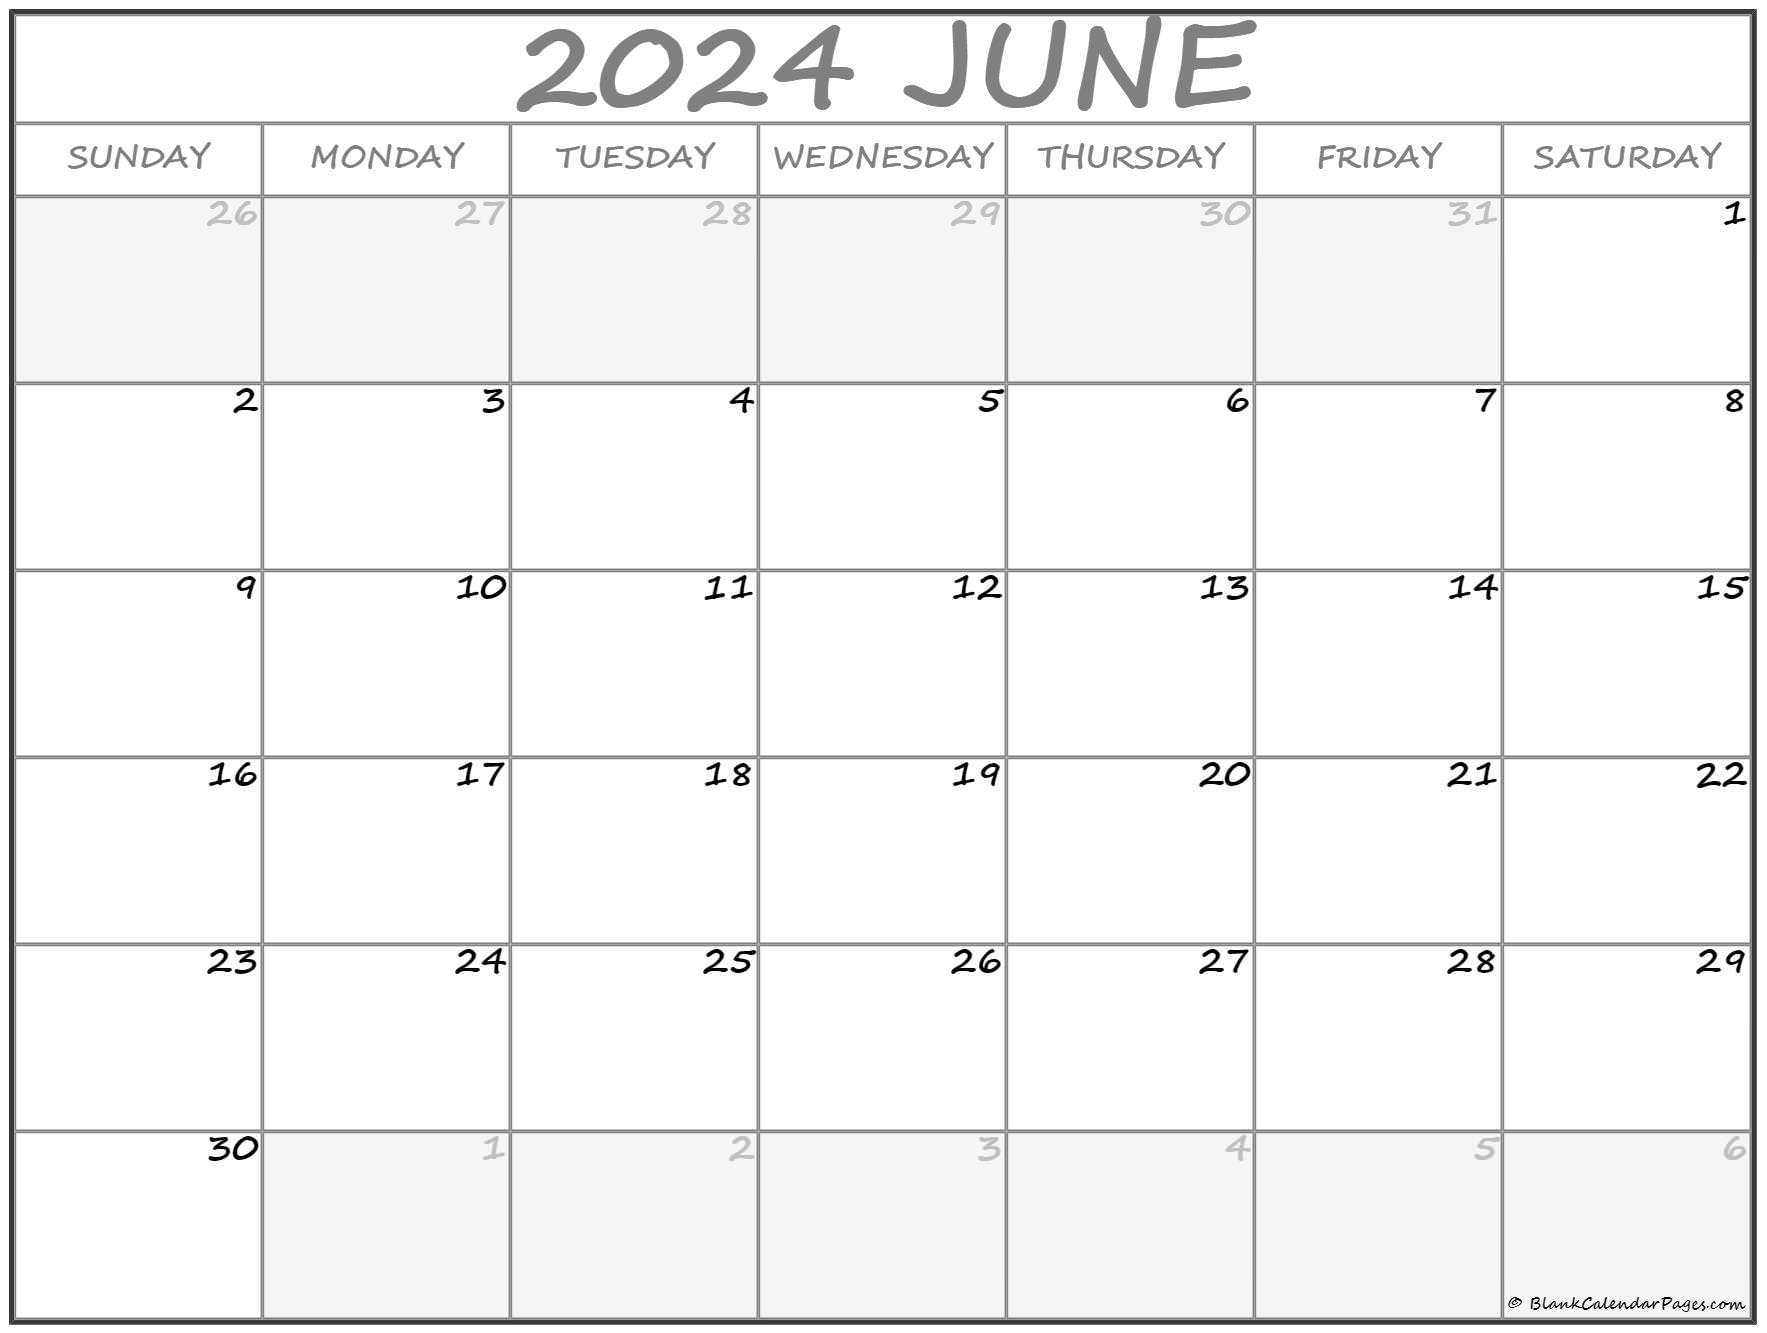 Игры июнь 2024. Календарь 2024. Страницы календаря на 2024 году. Американский календарь 2024. Календарь 2024 картинки.